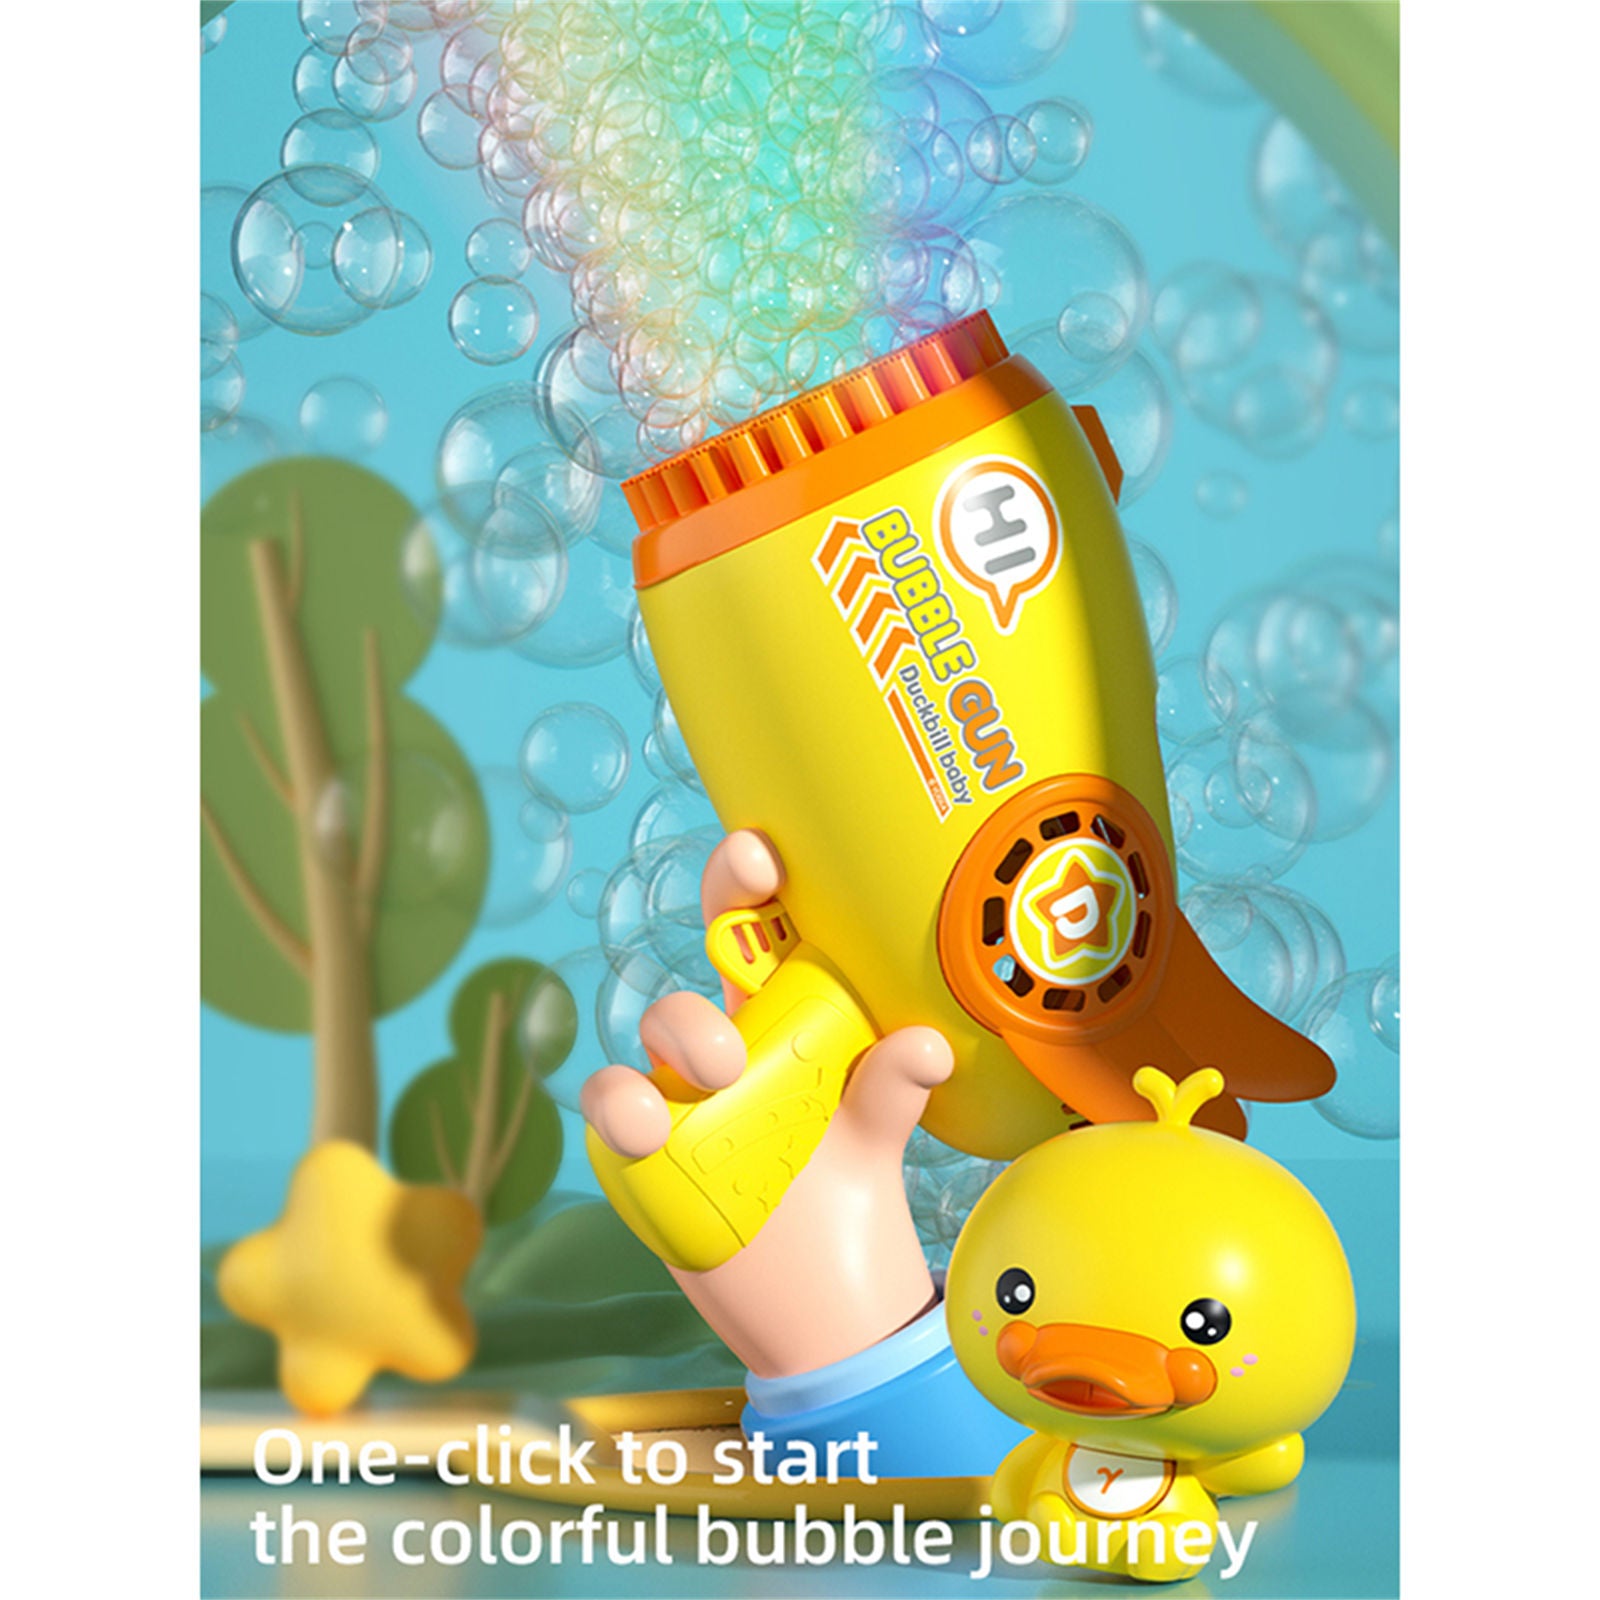 Bubblerainbow Yellow Duck 69-Hole Automatic Bubble Gun Toy Outdoor Soap Cartoon Machine